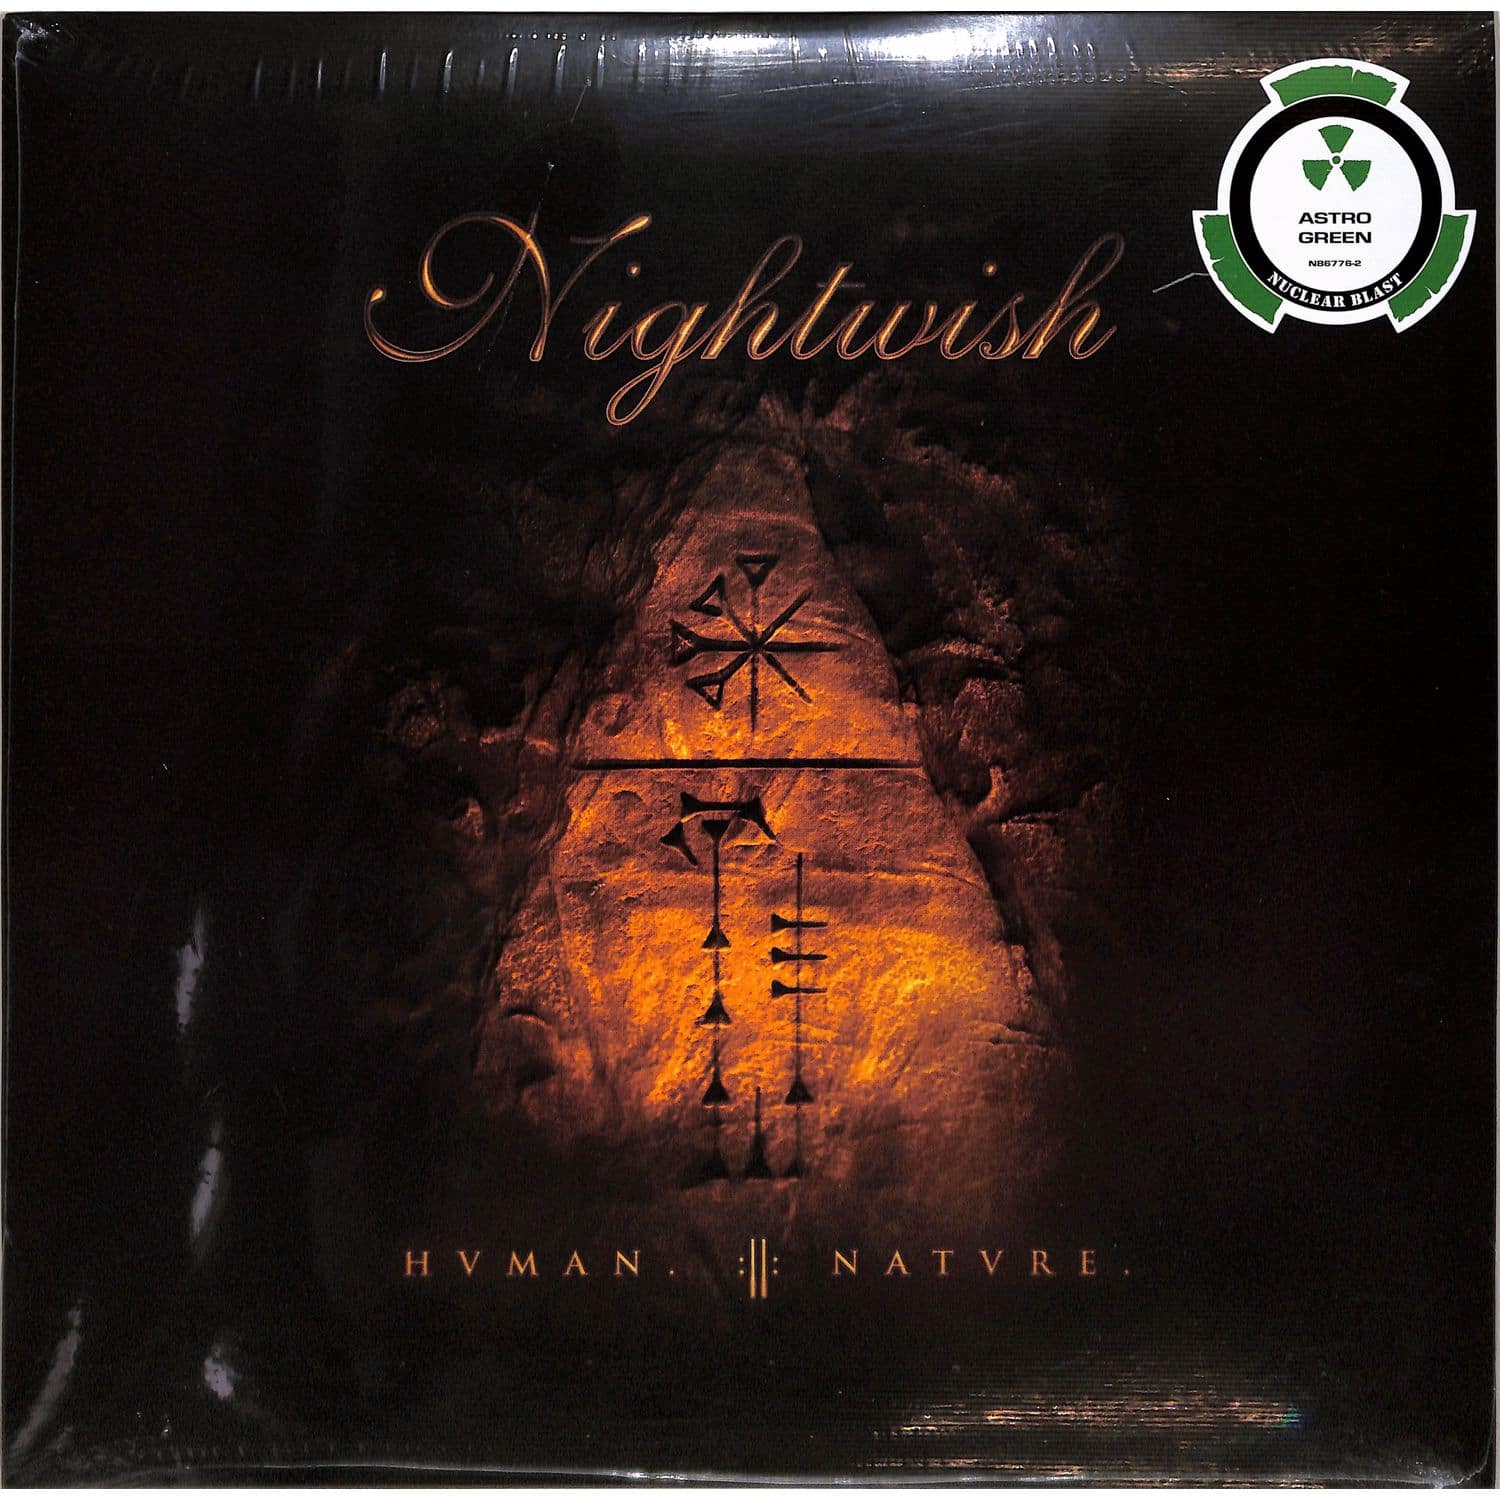 Nightwish - HUMAN.:II:NATURE.